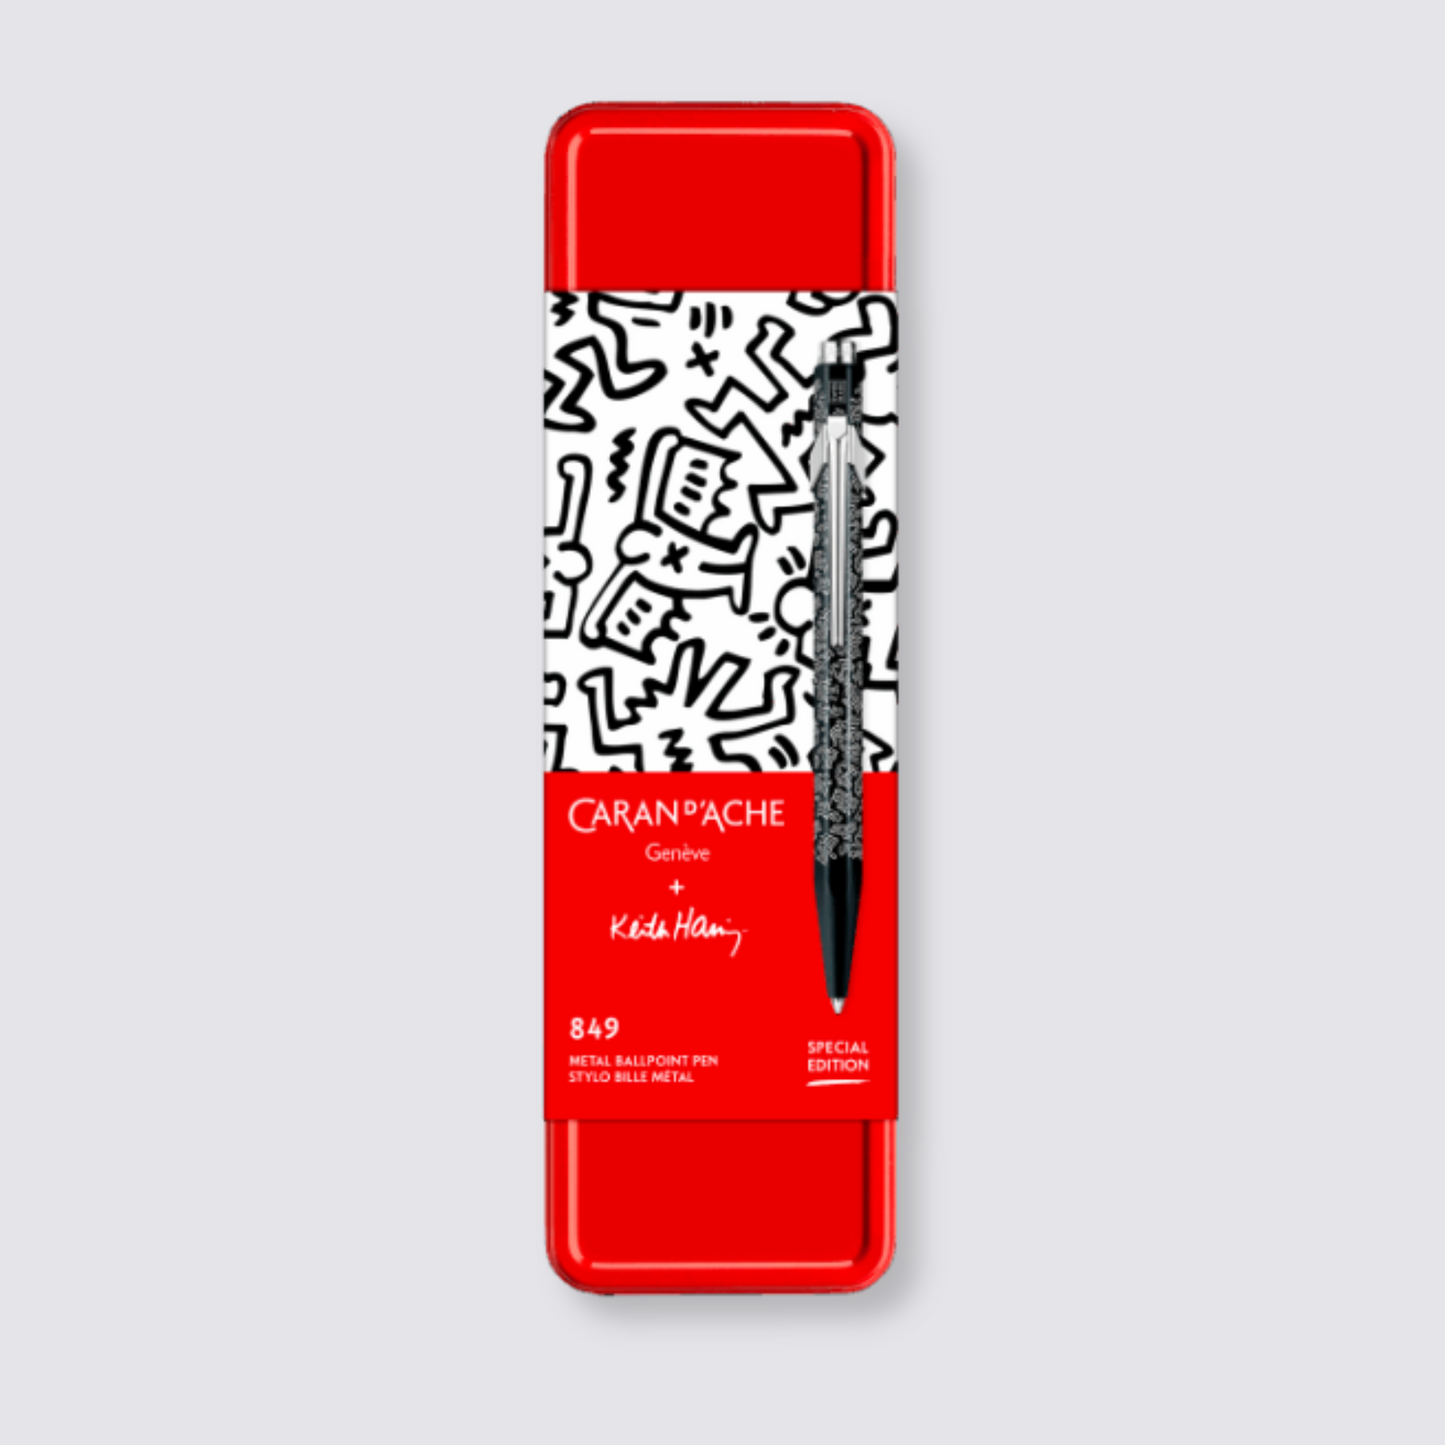 Keith Haring Print ballpoint pen in metal tin